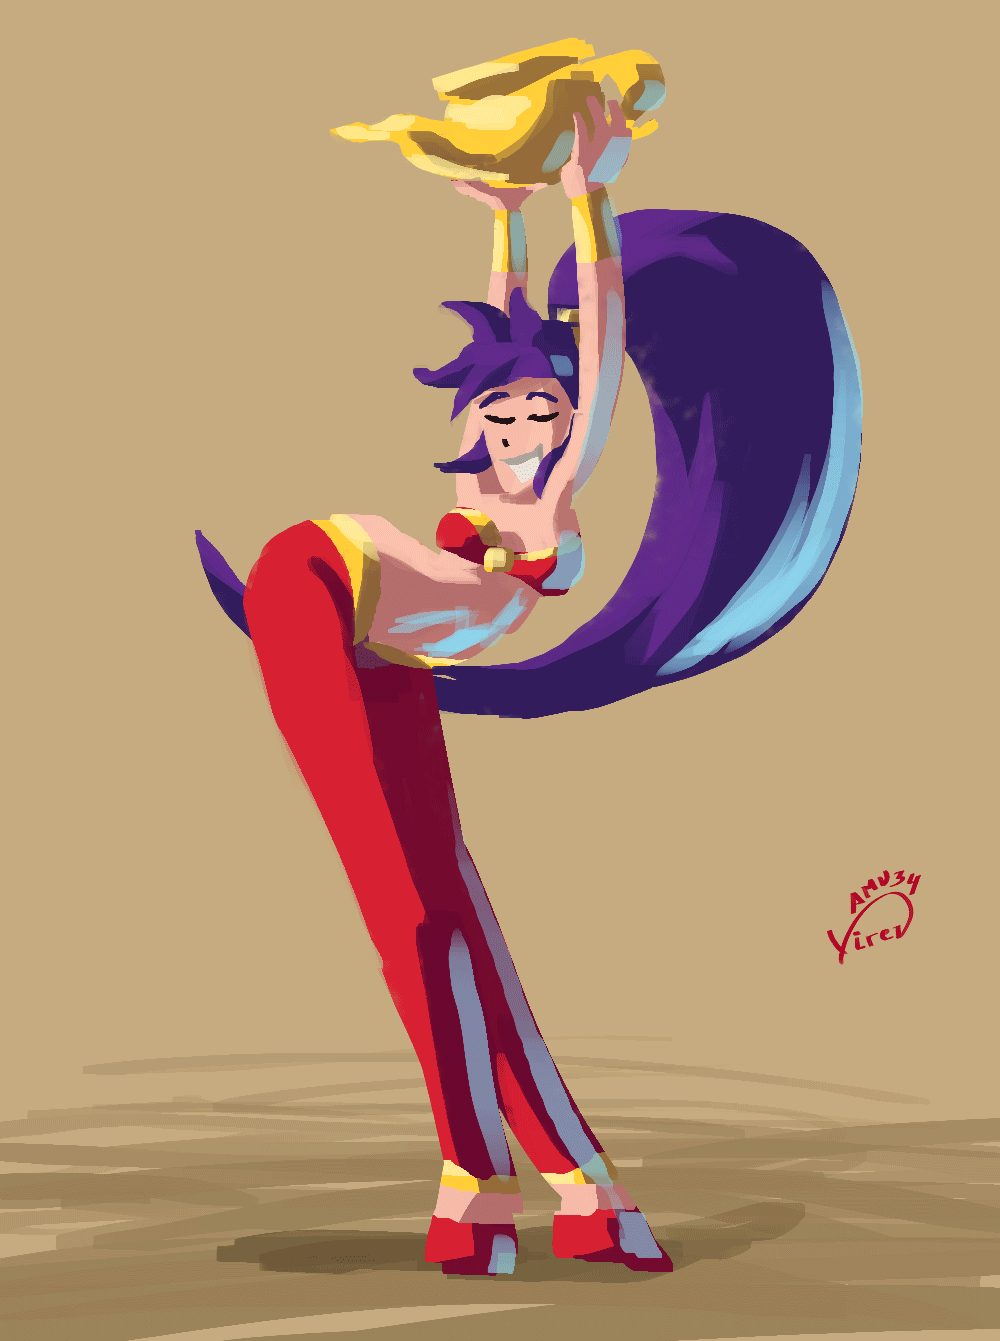 Shantae dancing with the lamp. 